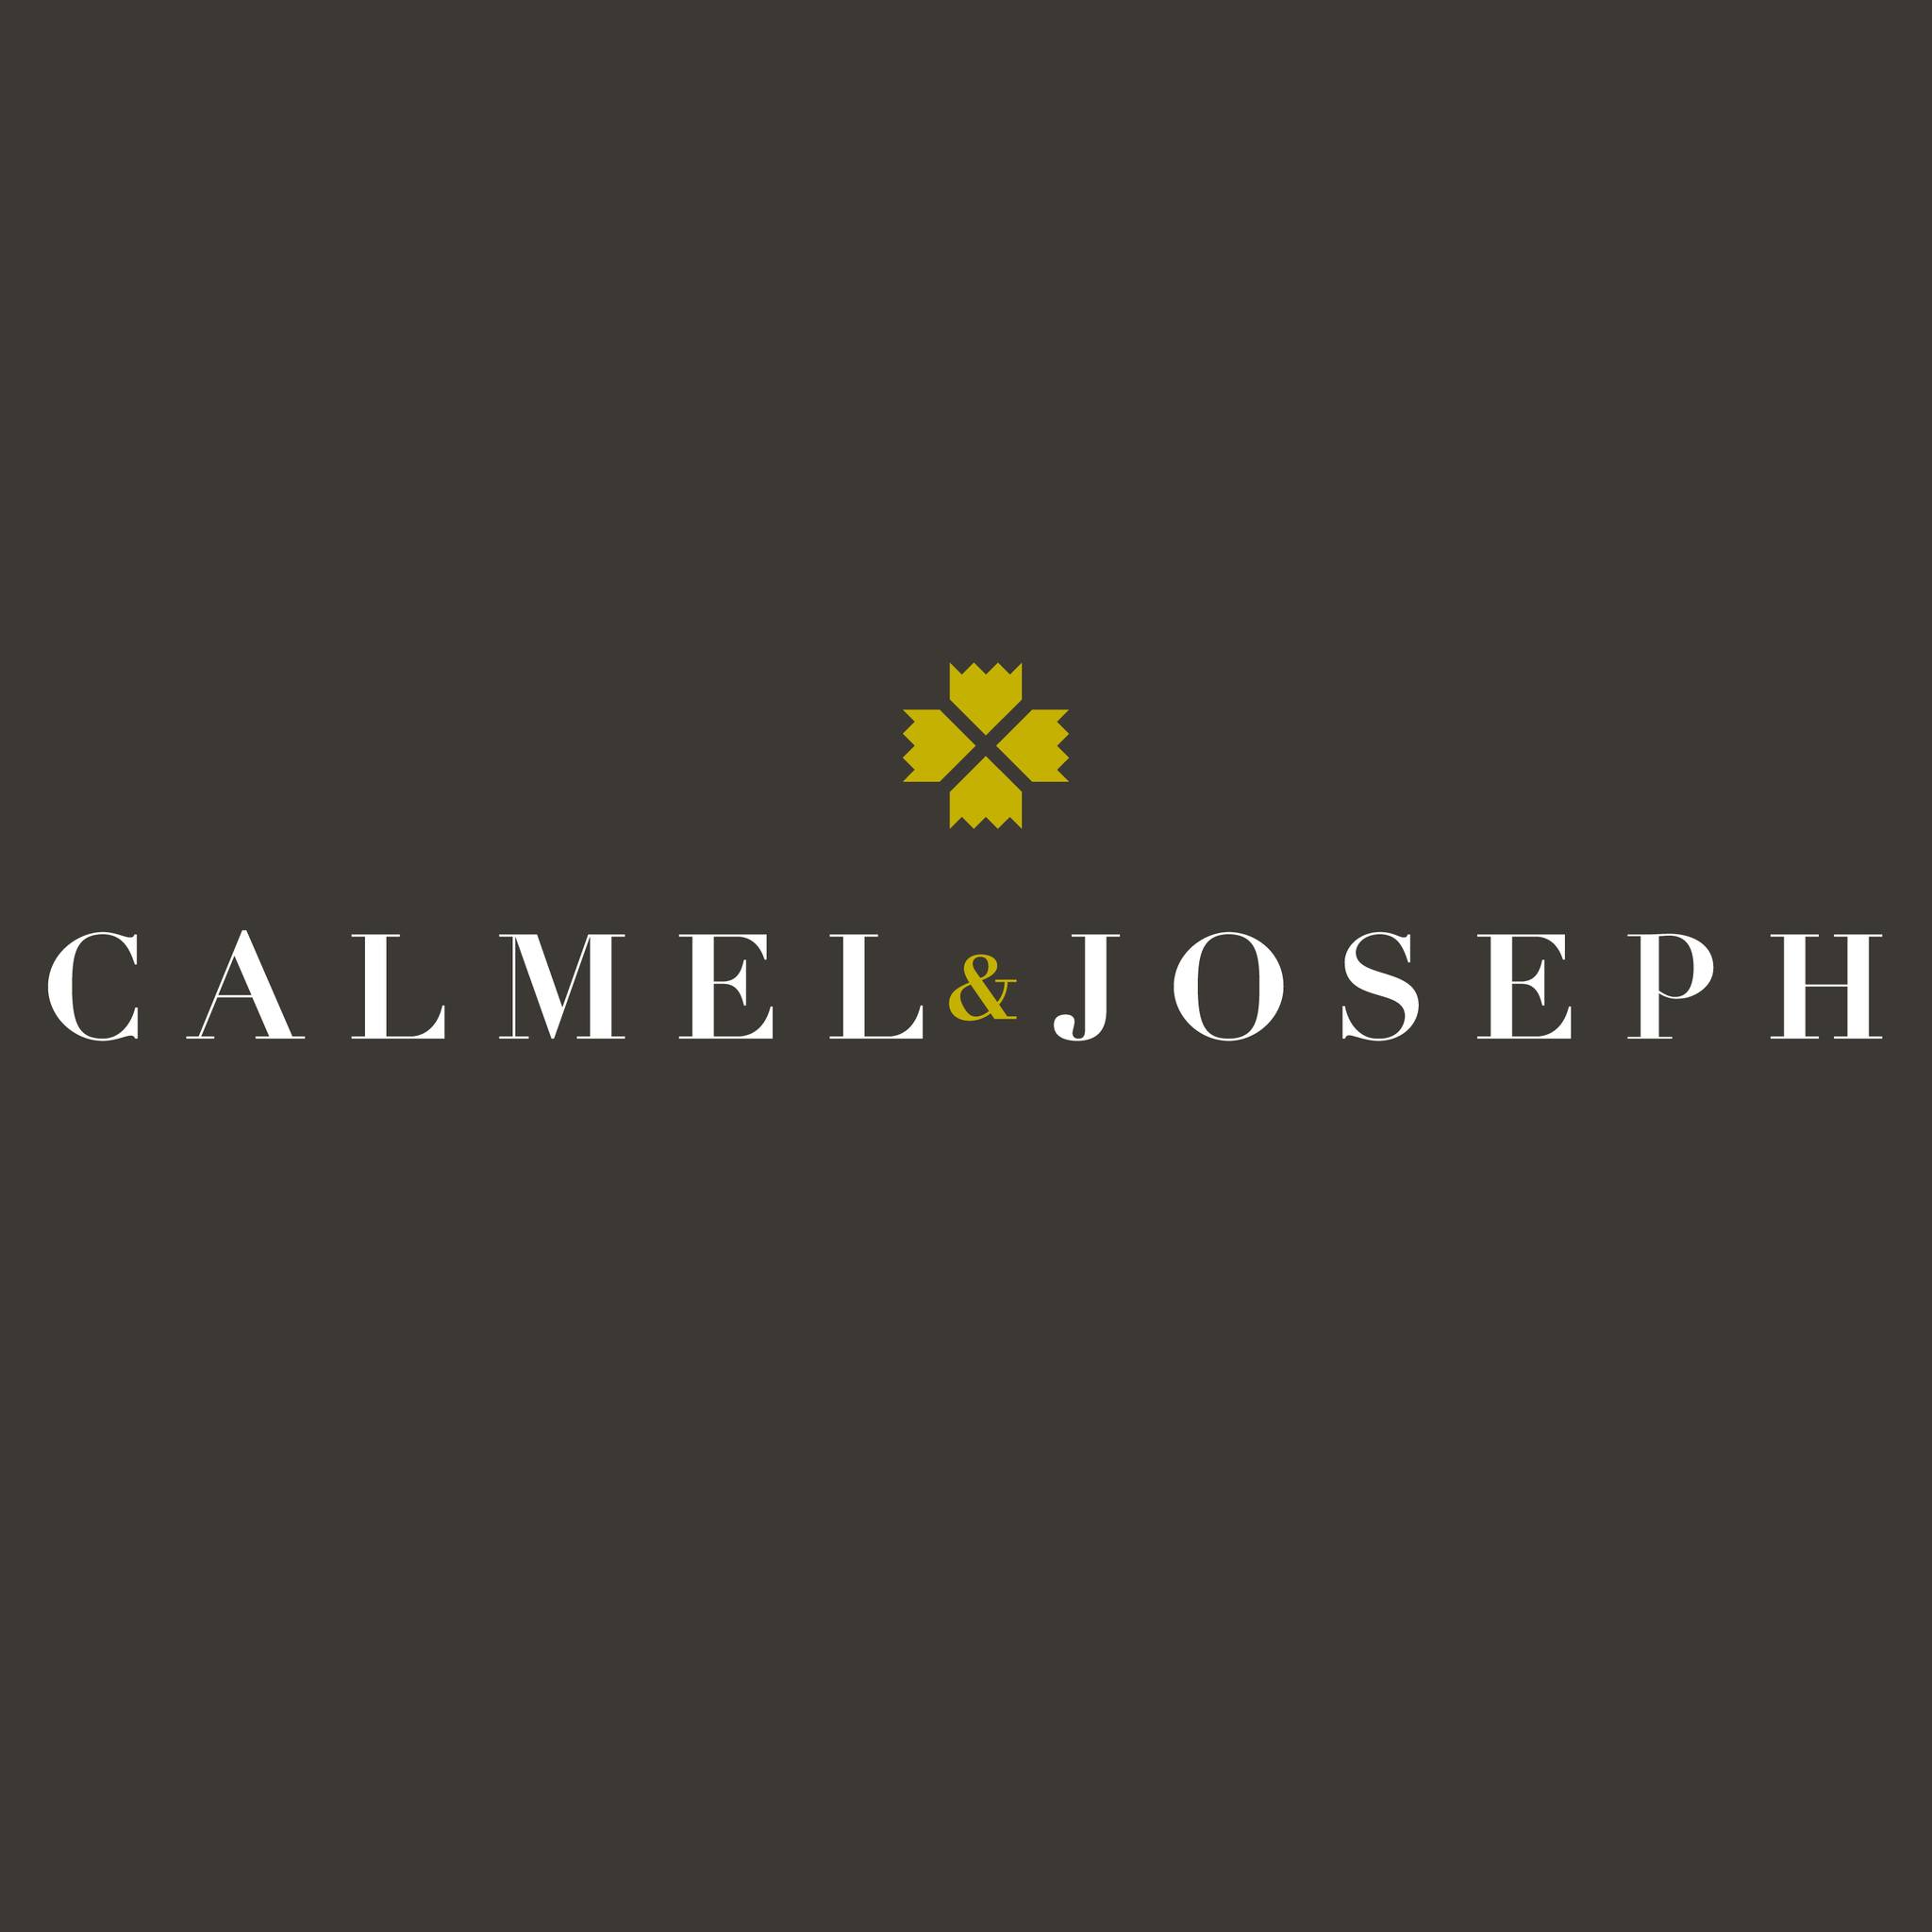 Calmel & Joseph